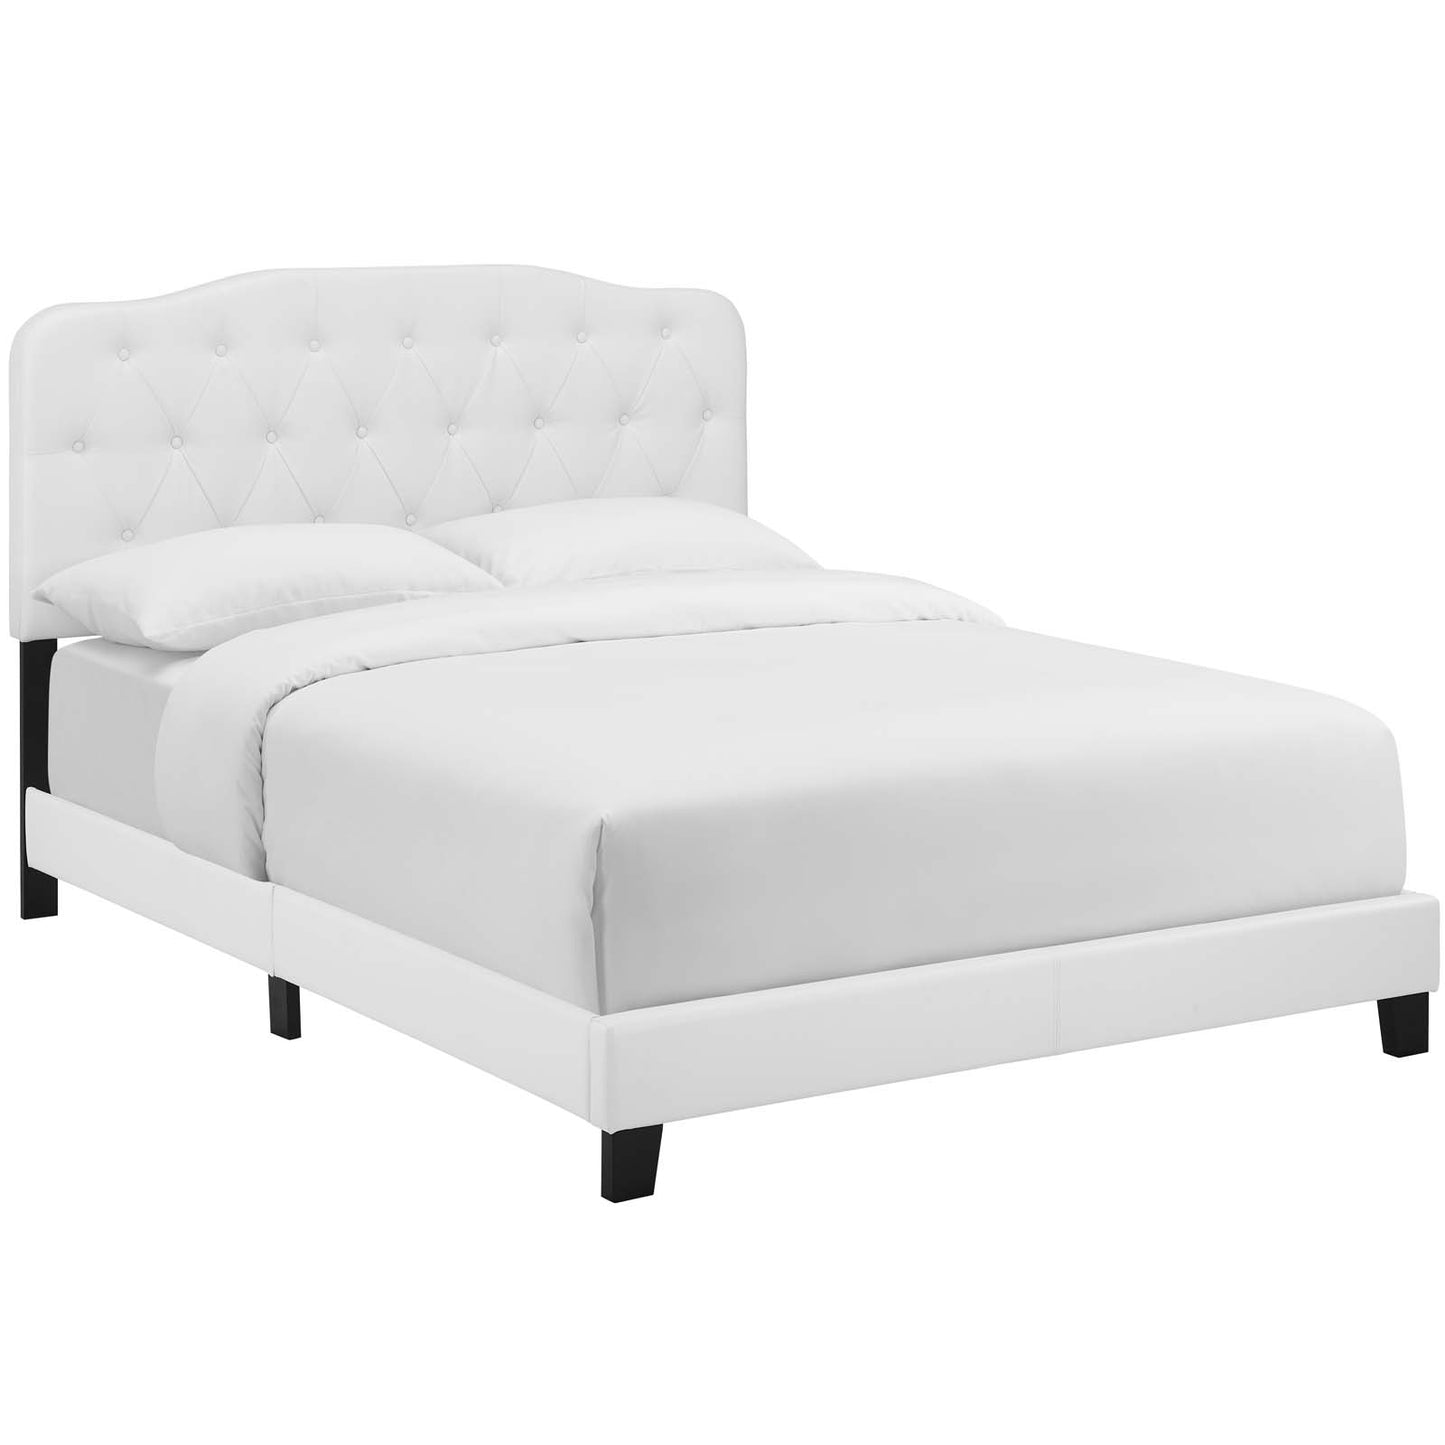 Amelia Full Faux Leather Bed White MOD-5991-WHI